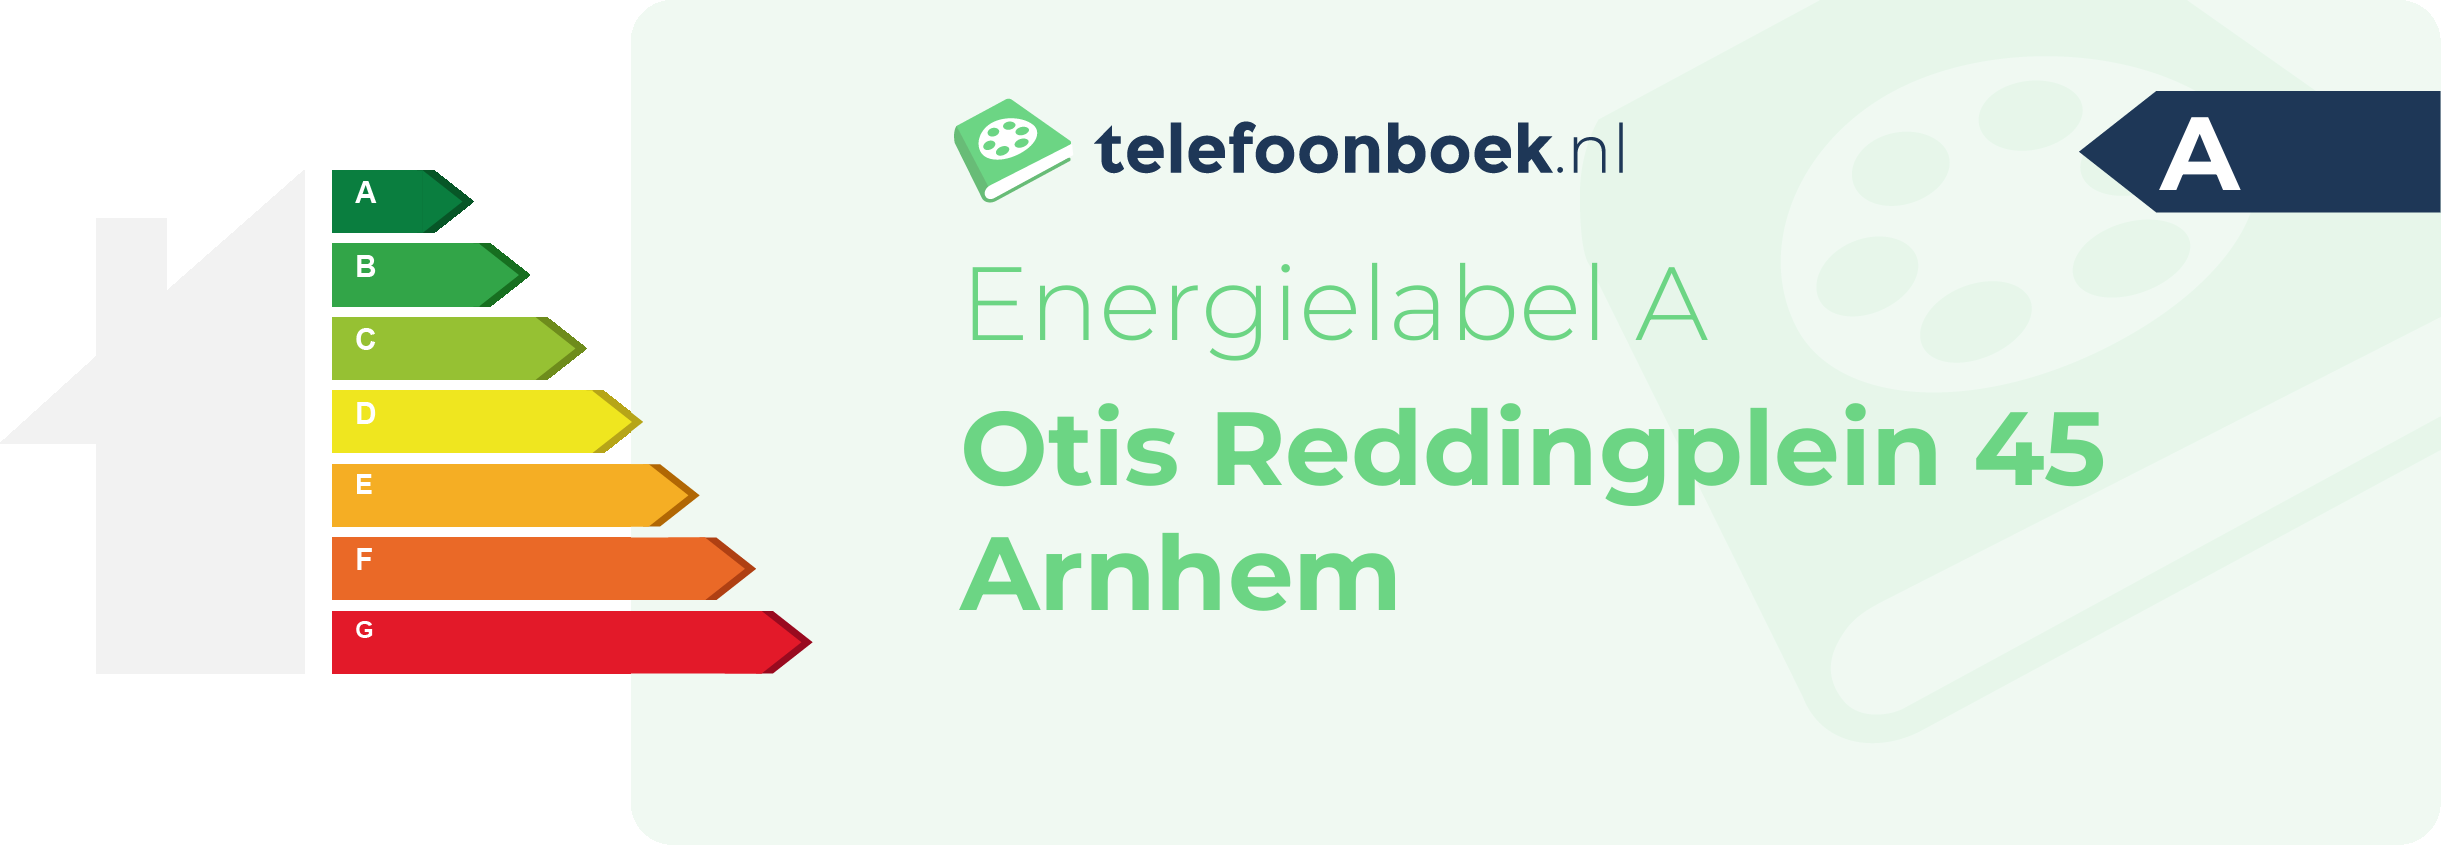 Energielabel Otis Reddingplein 45 Arnhem